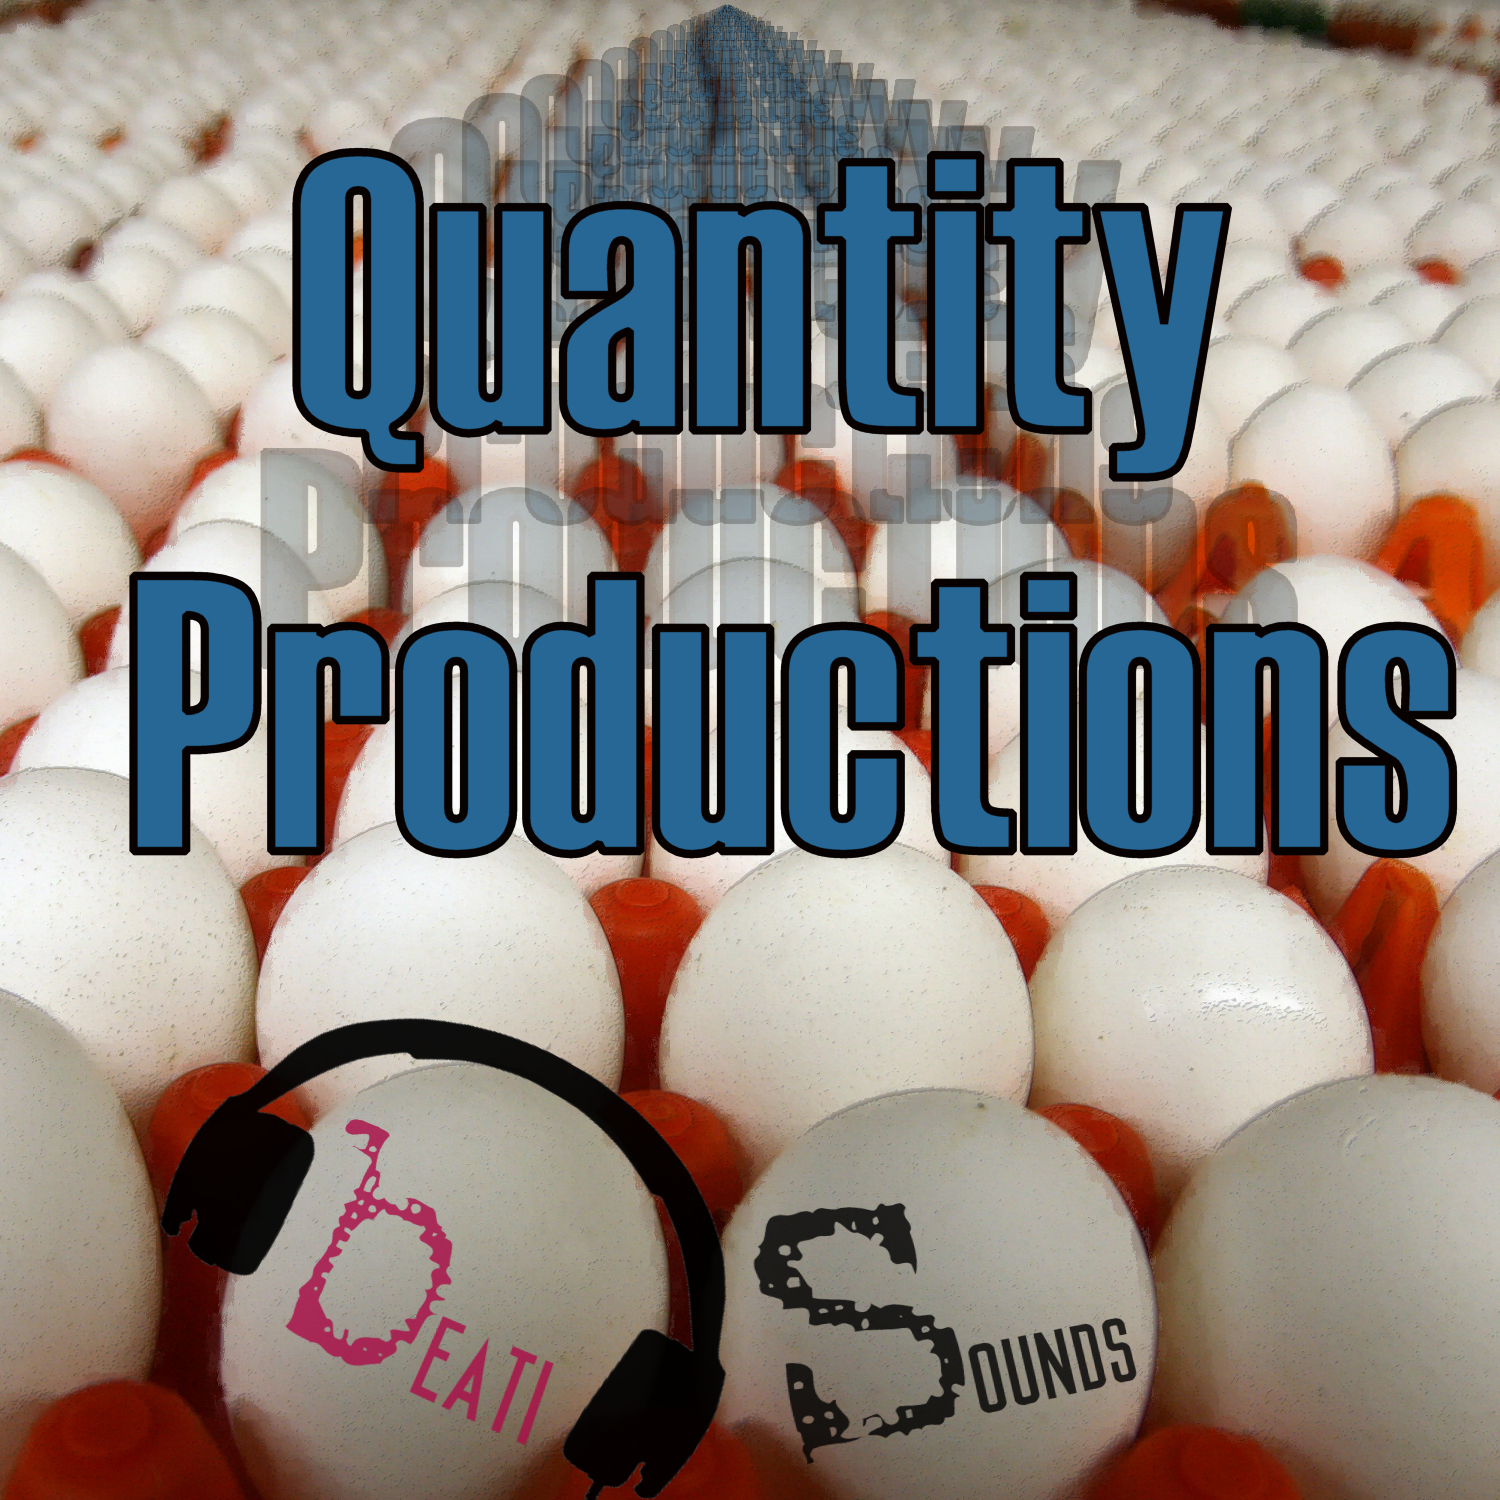 Product quantity